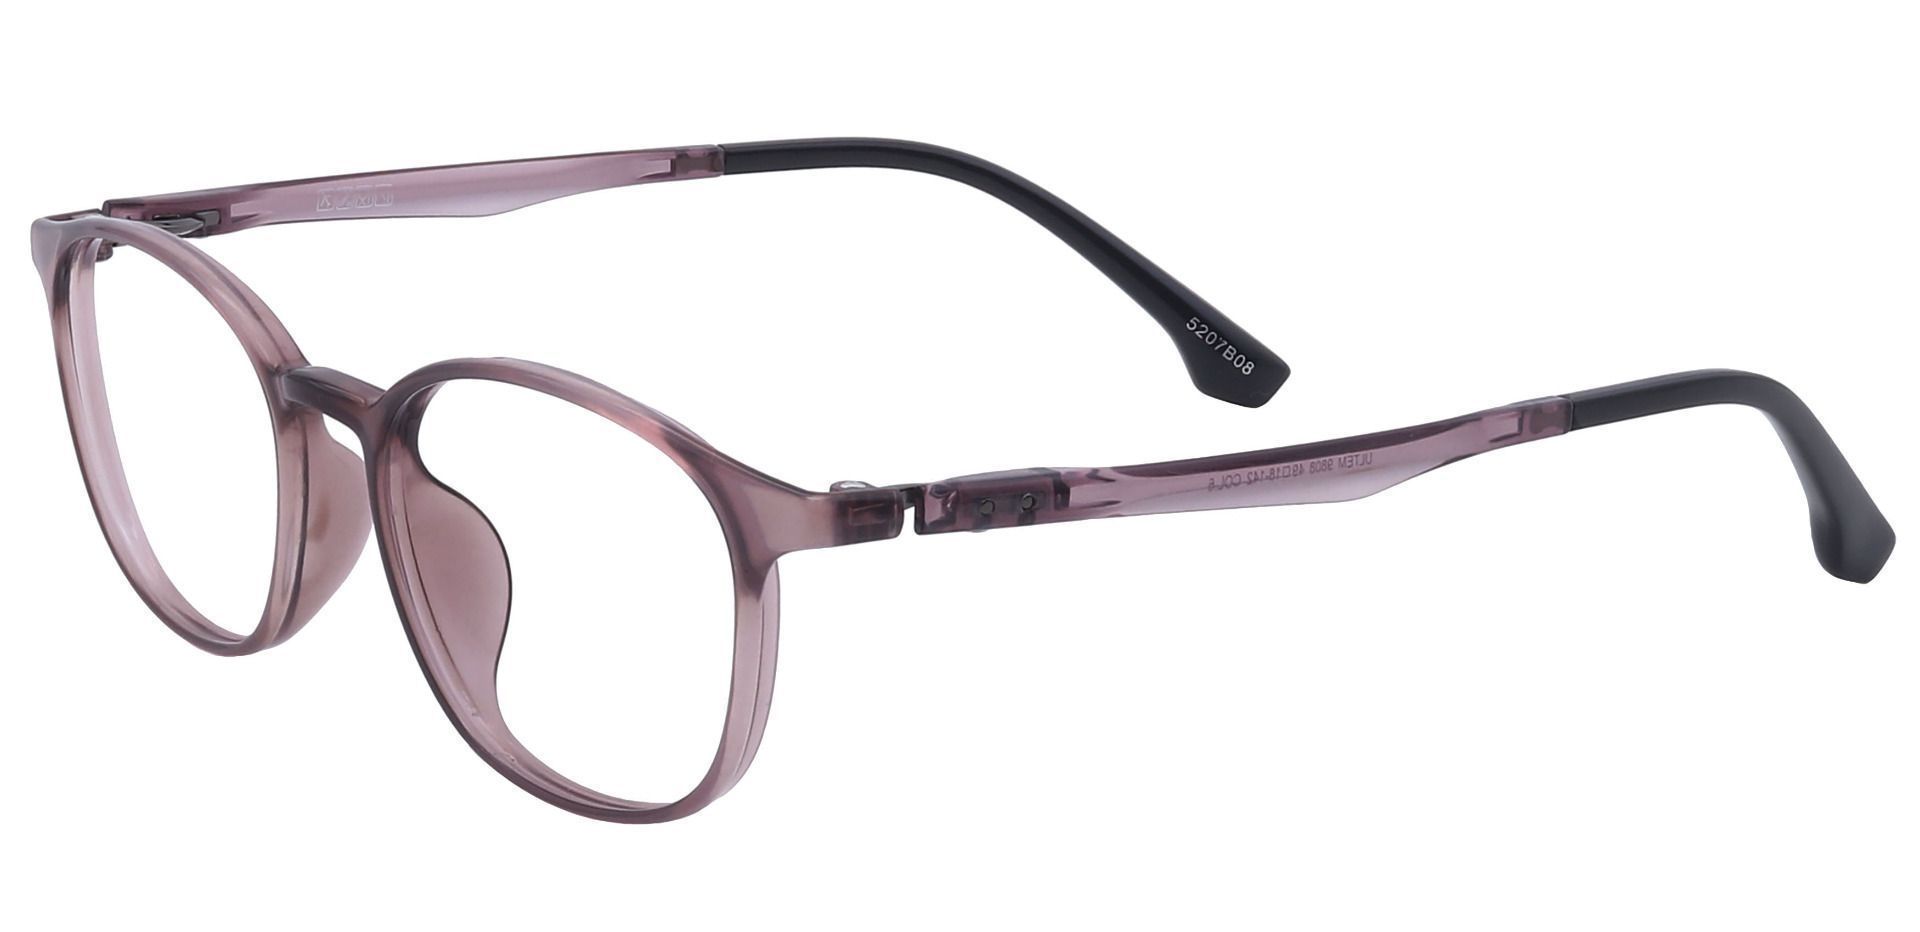 Shannon Oval Eyeglasses Frame - Brown